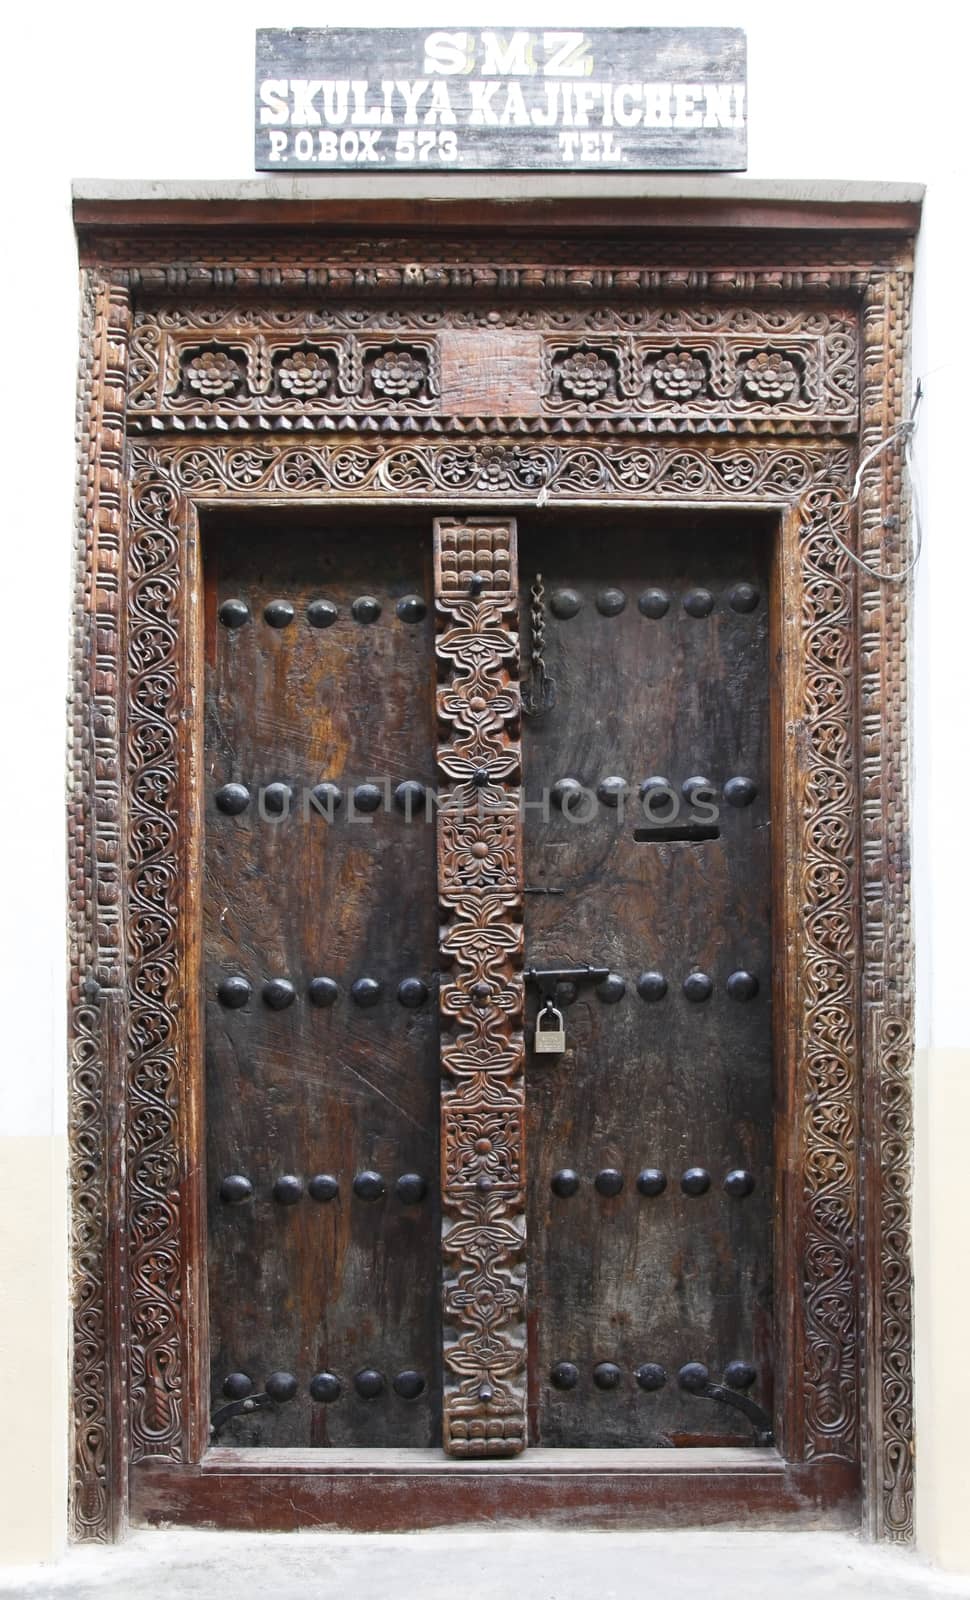 Old wooden door at Stone Town the capital of Zanzibar island East Africa.